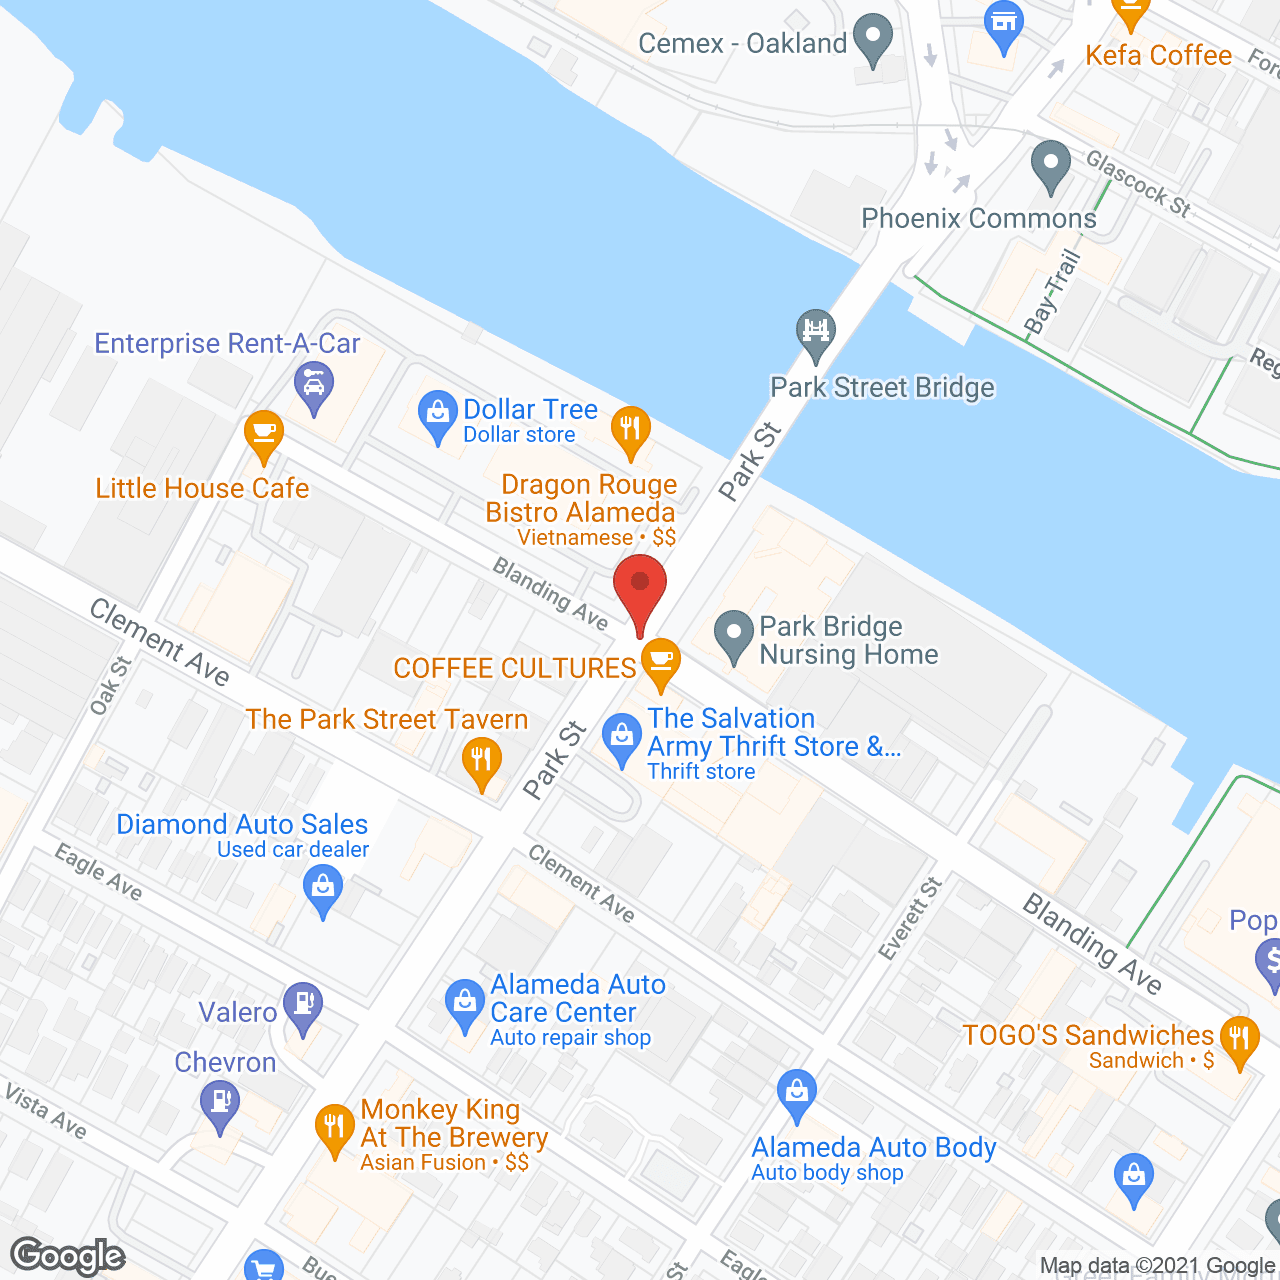 Park Bridge Nursing Home in google map